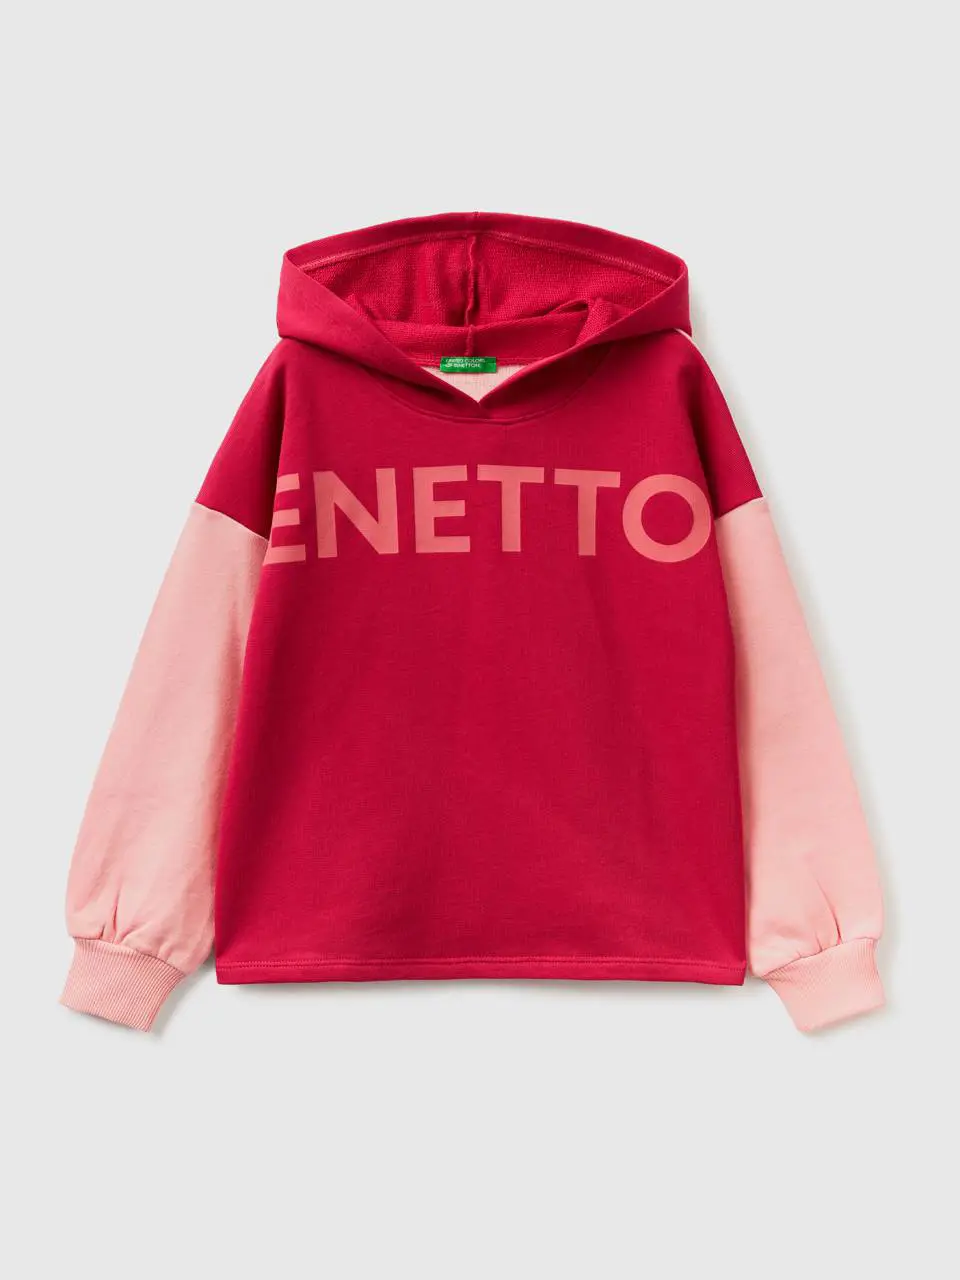 Benetton oversized fit hoodie. 1